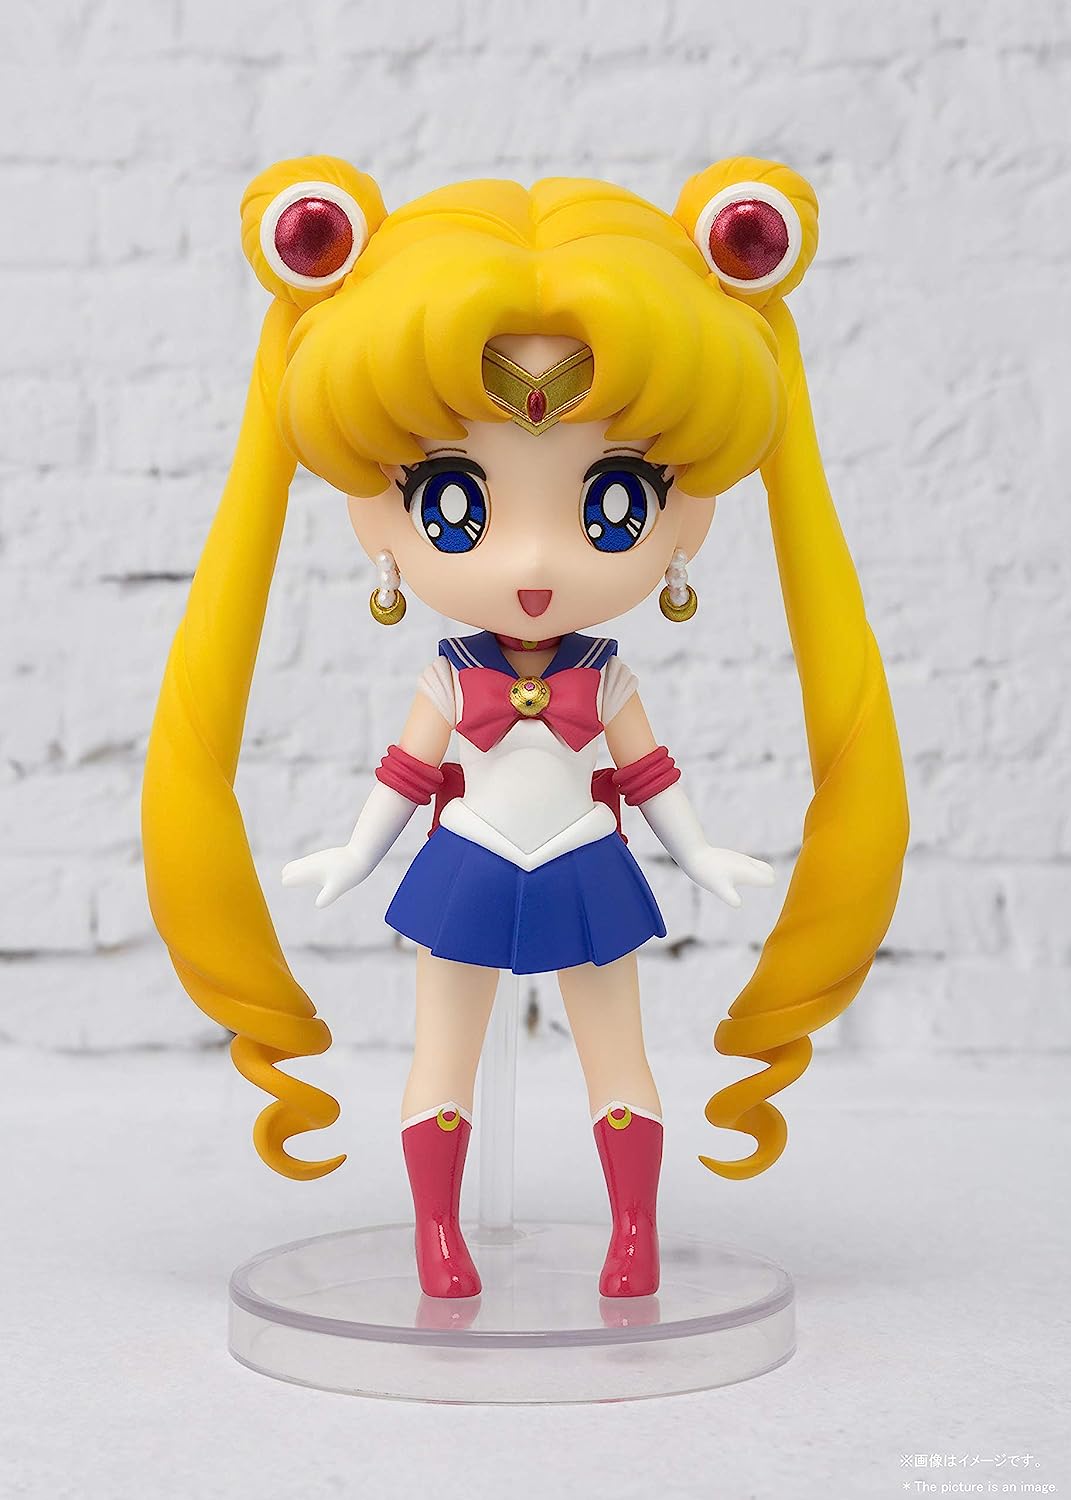 Figuarts mini Sailor Moon "Sailor Moon" | animota